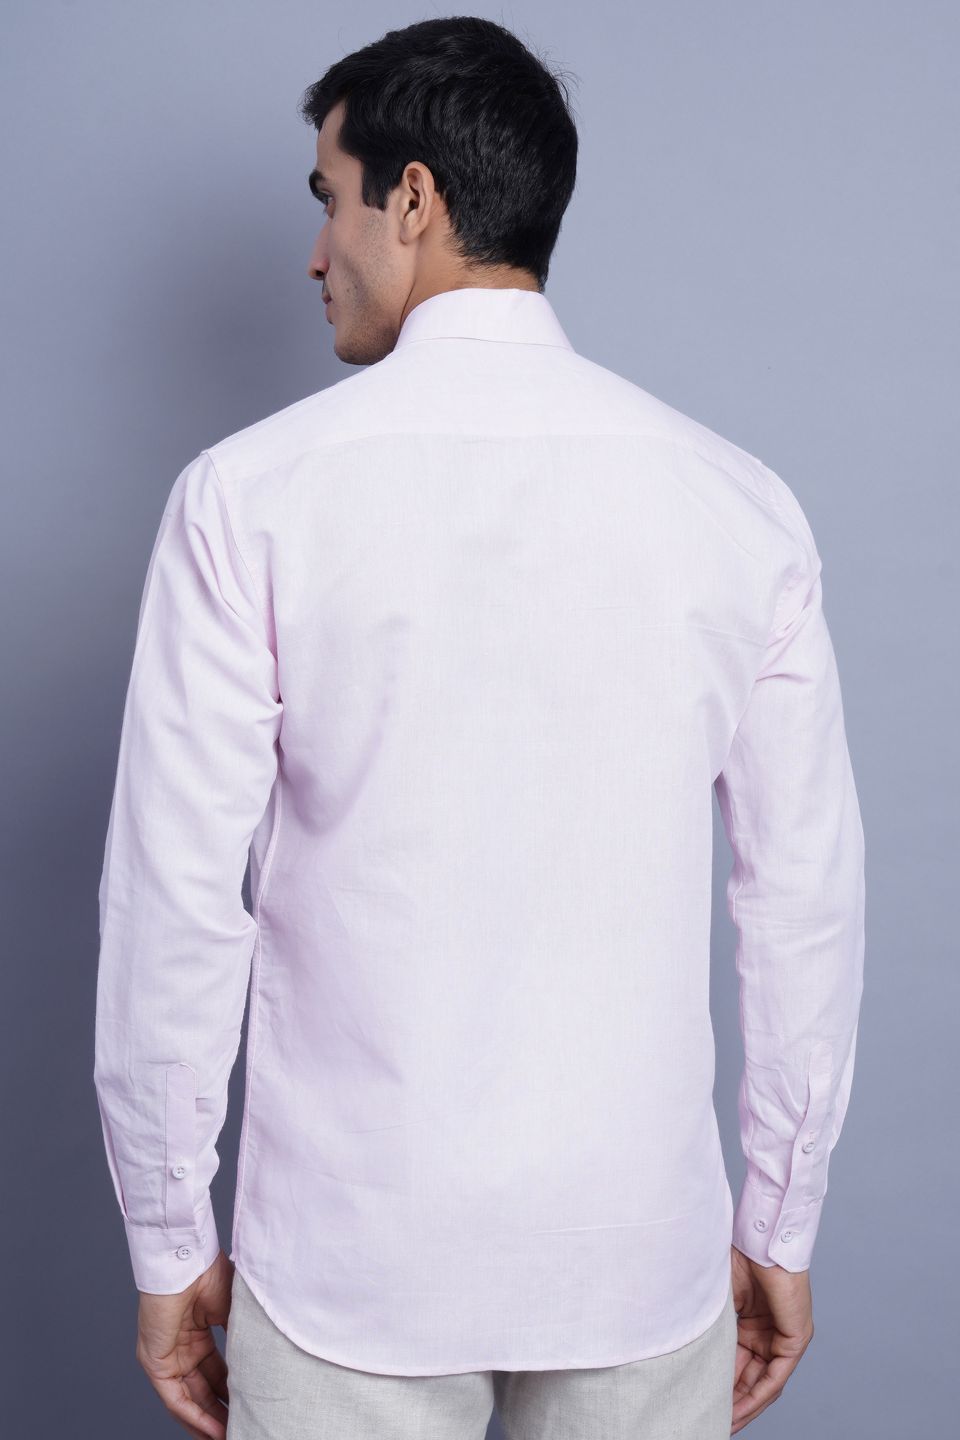 Wintage Men's Linen Casual Shirt: Cream